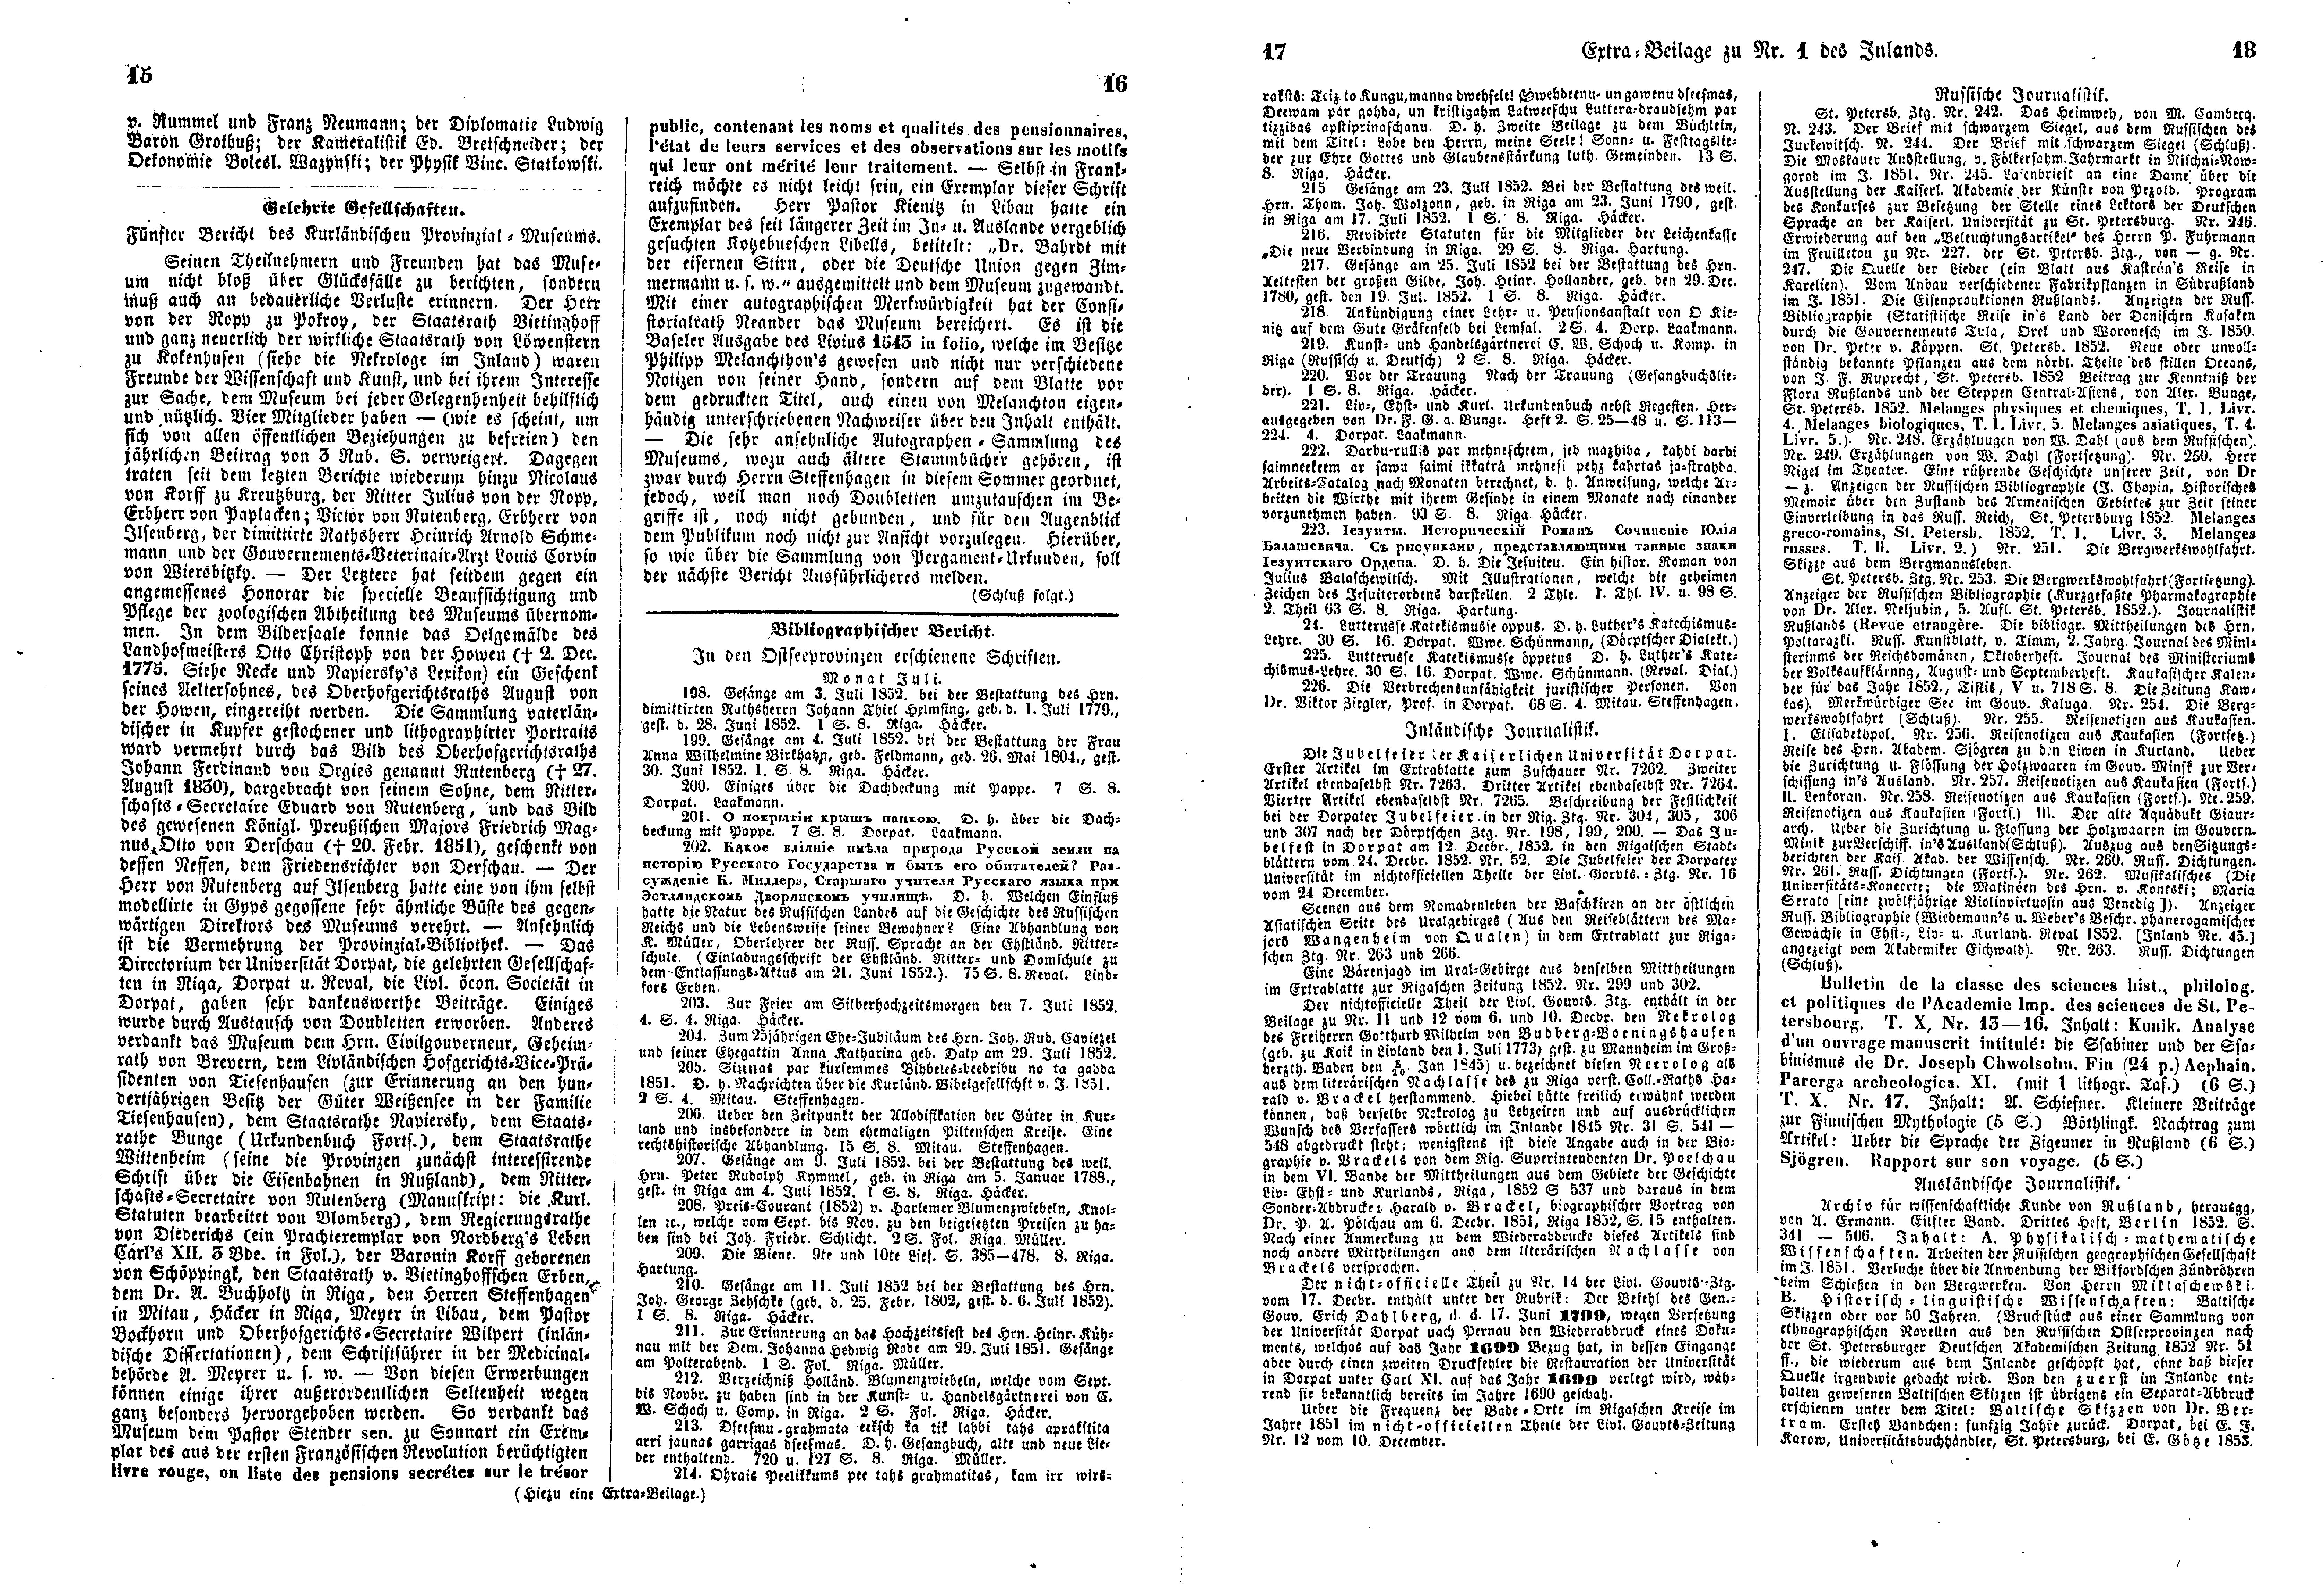 Das Inland [18] (1853) | 14. (15-18) Main body of text